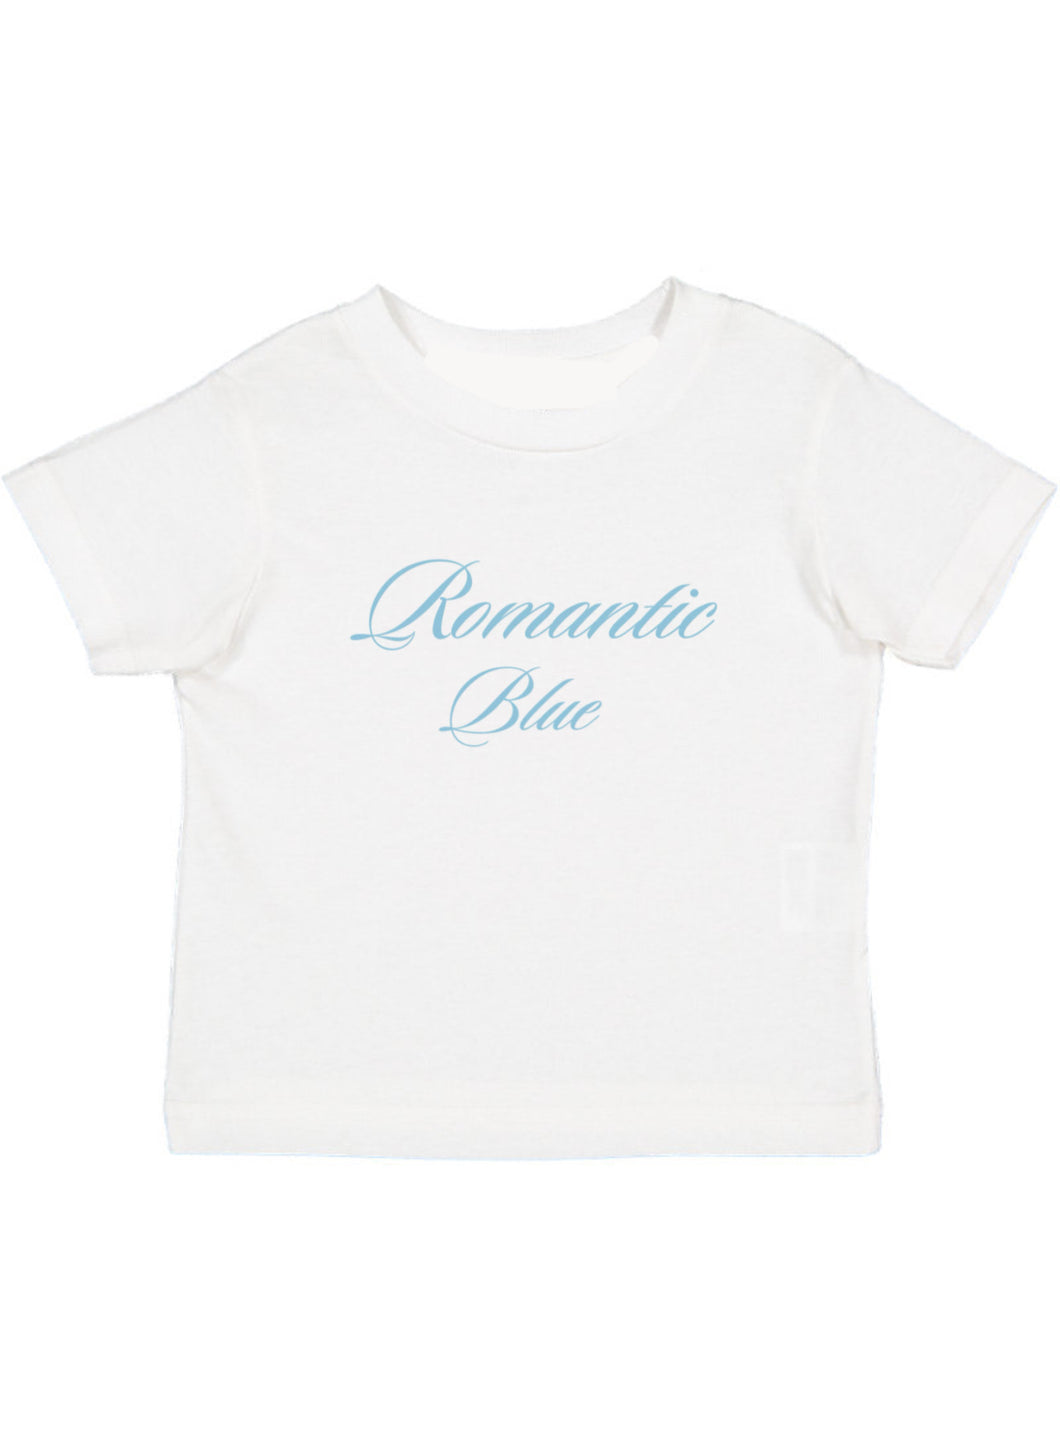 Romantic Blue Logo Baby Tee